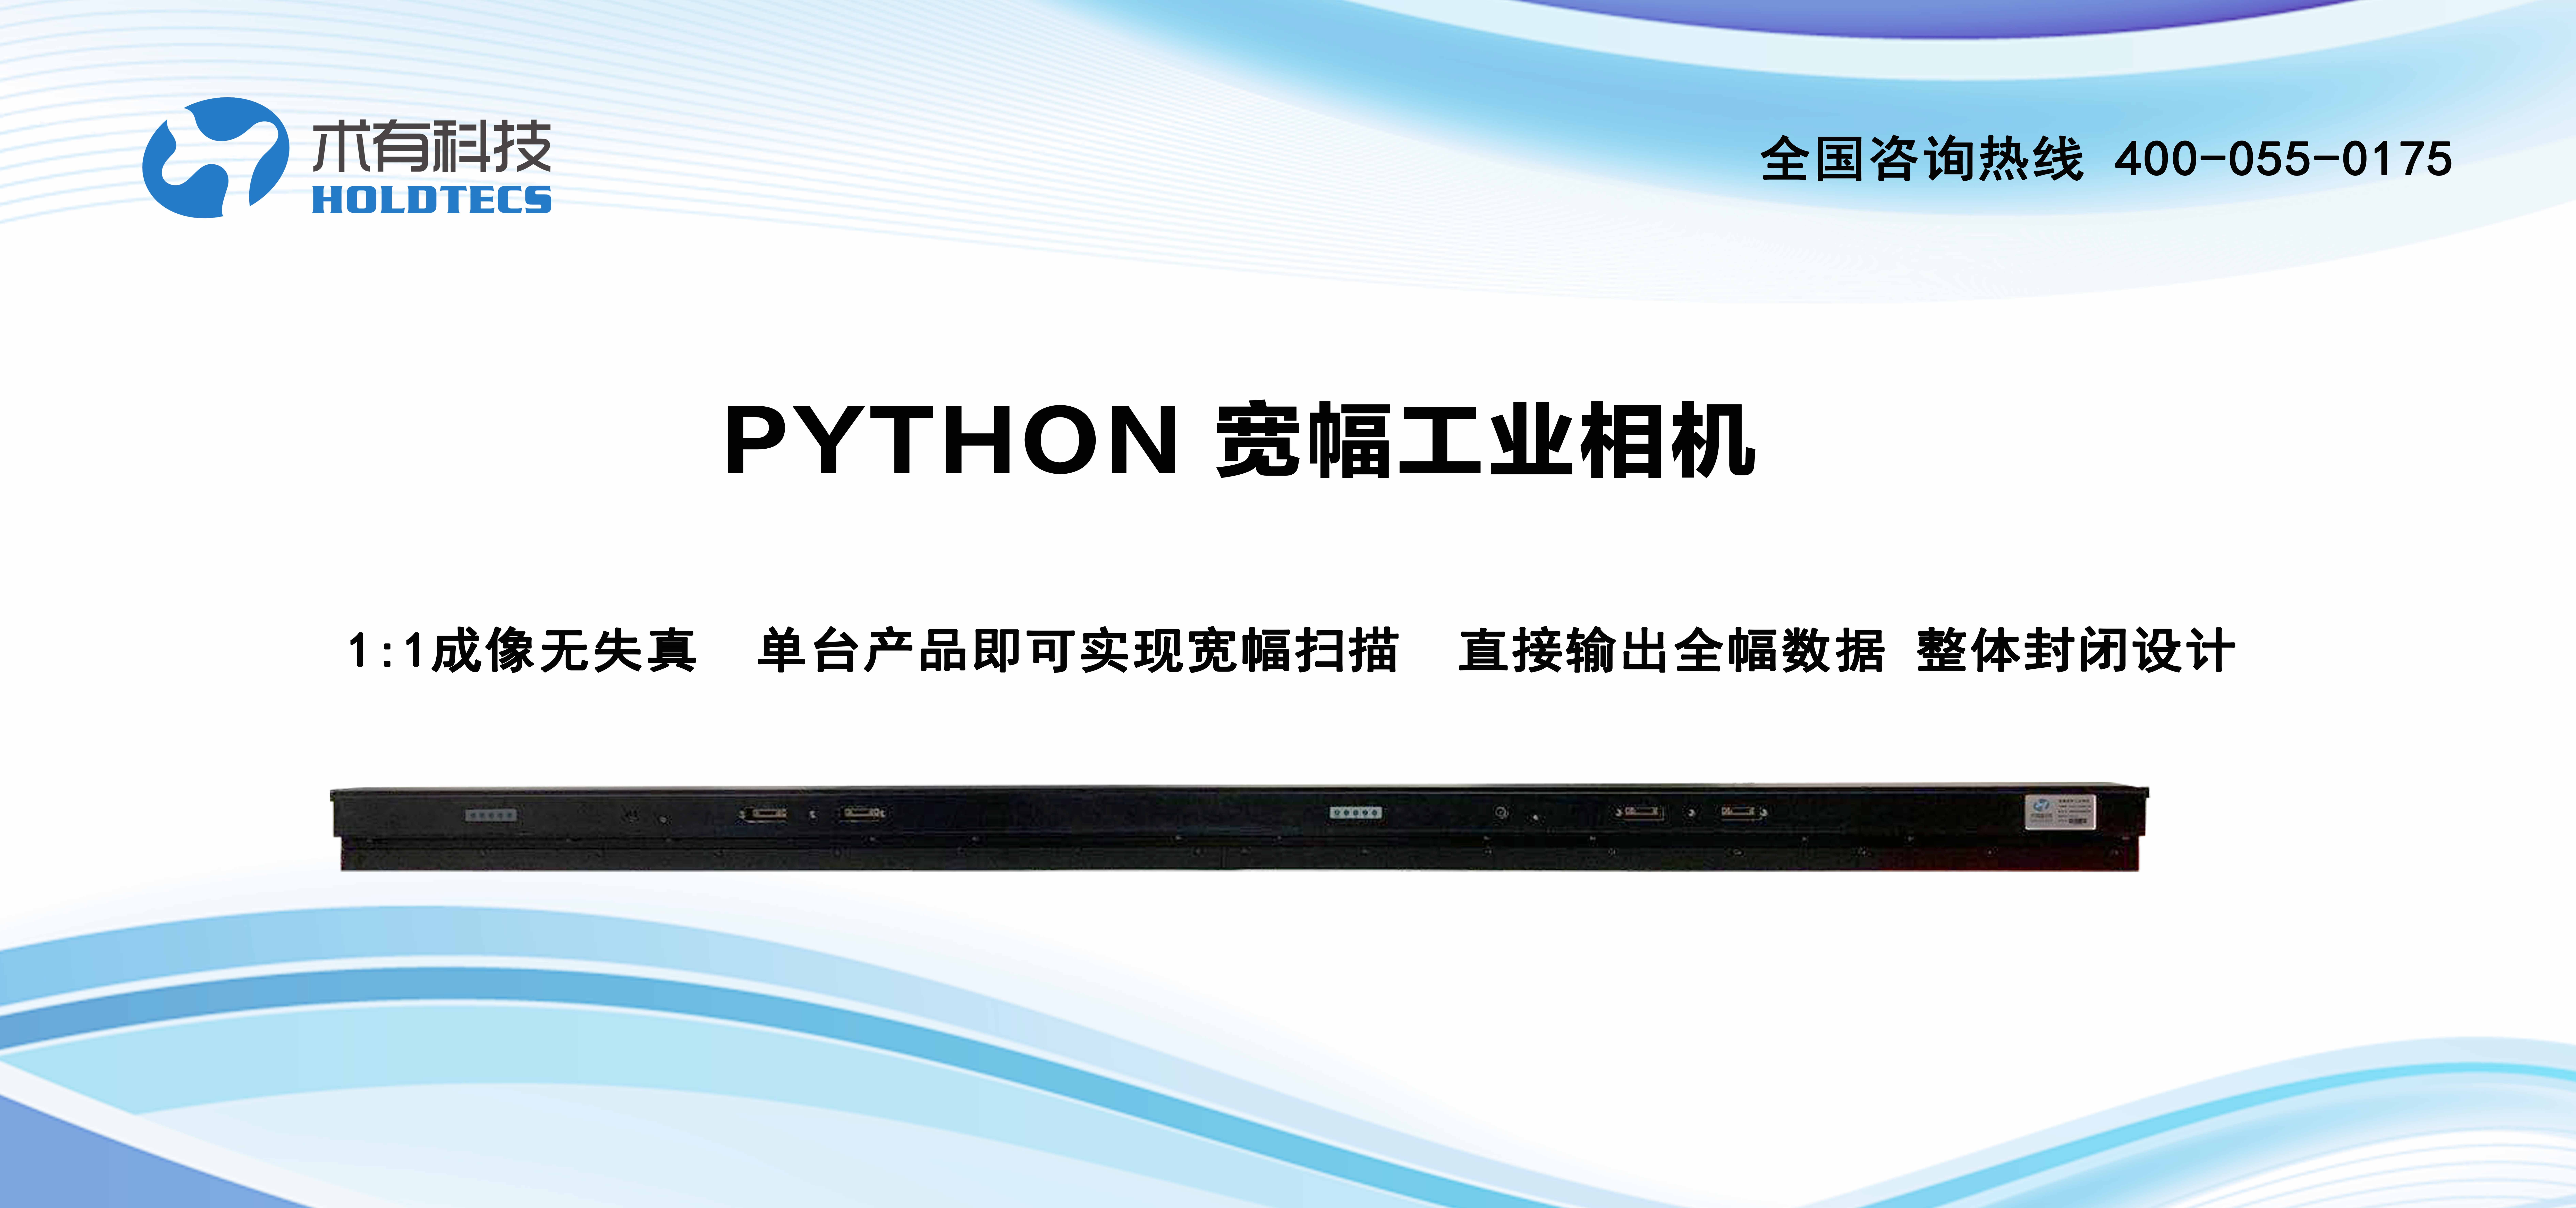 PYTHON-HM660D24